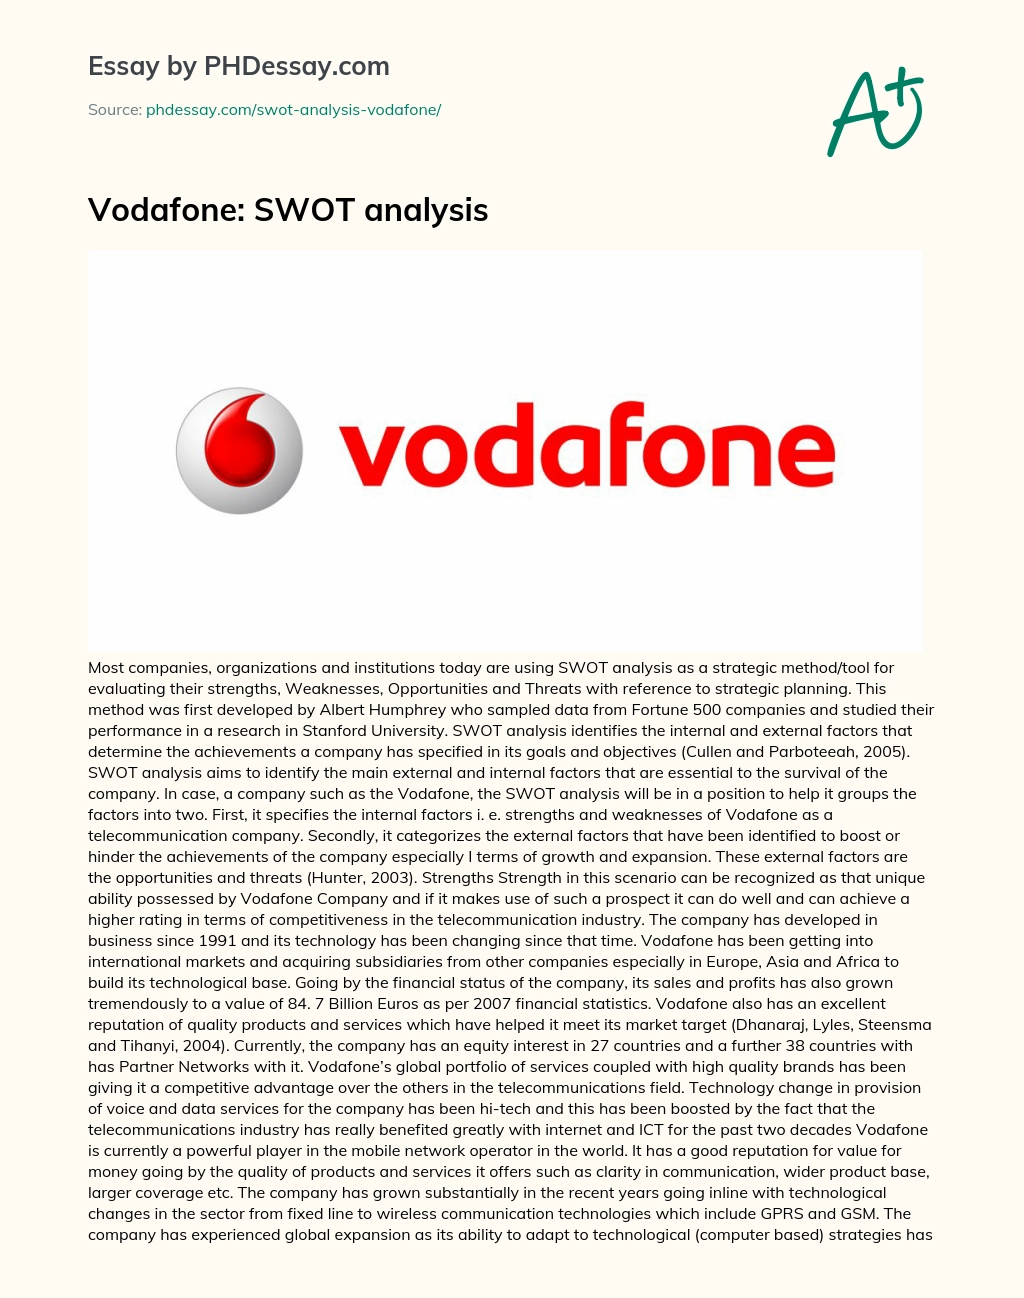 Vodafone: SWOT analysis essay